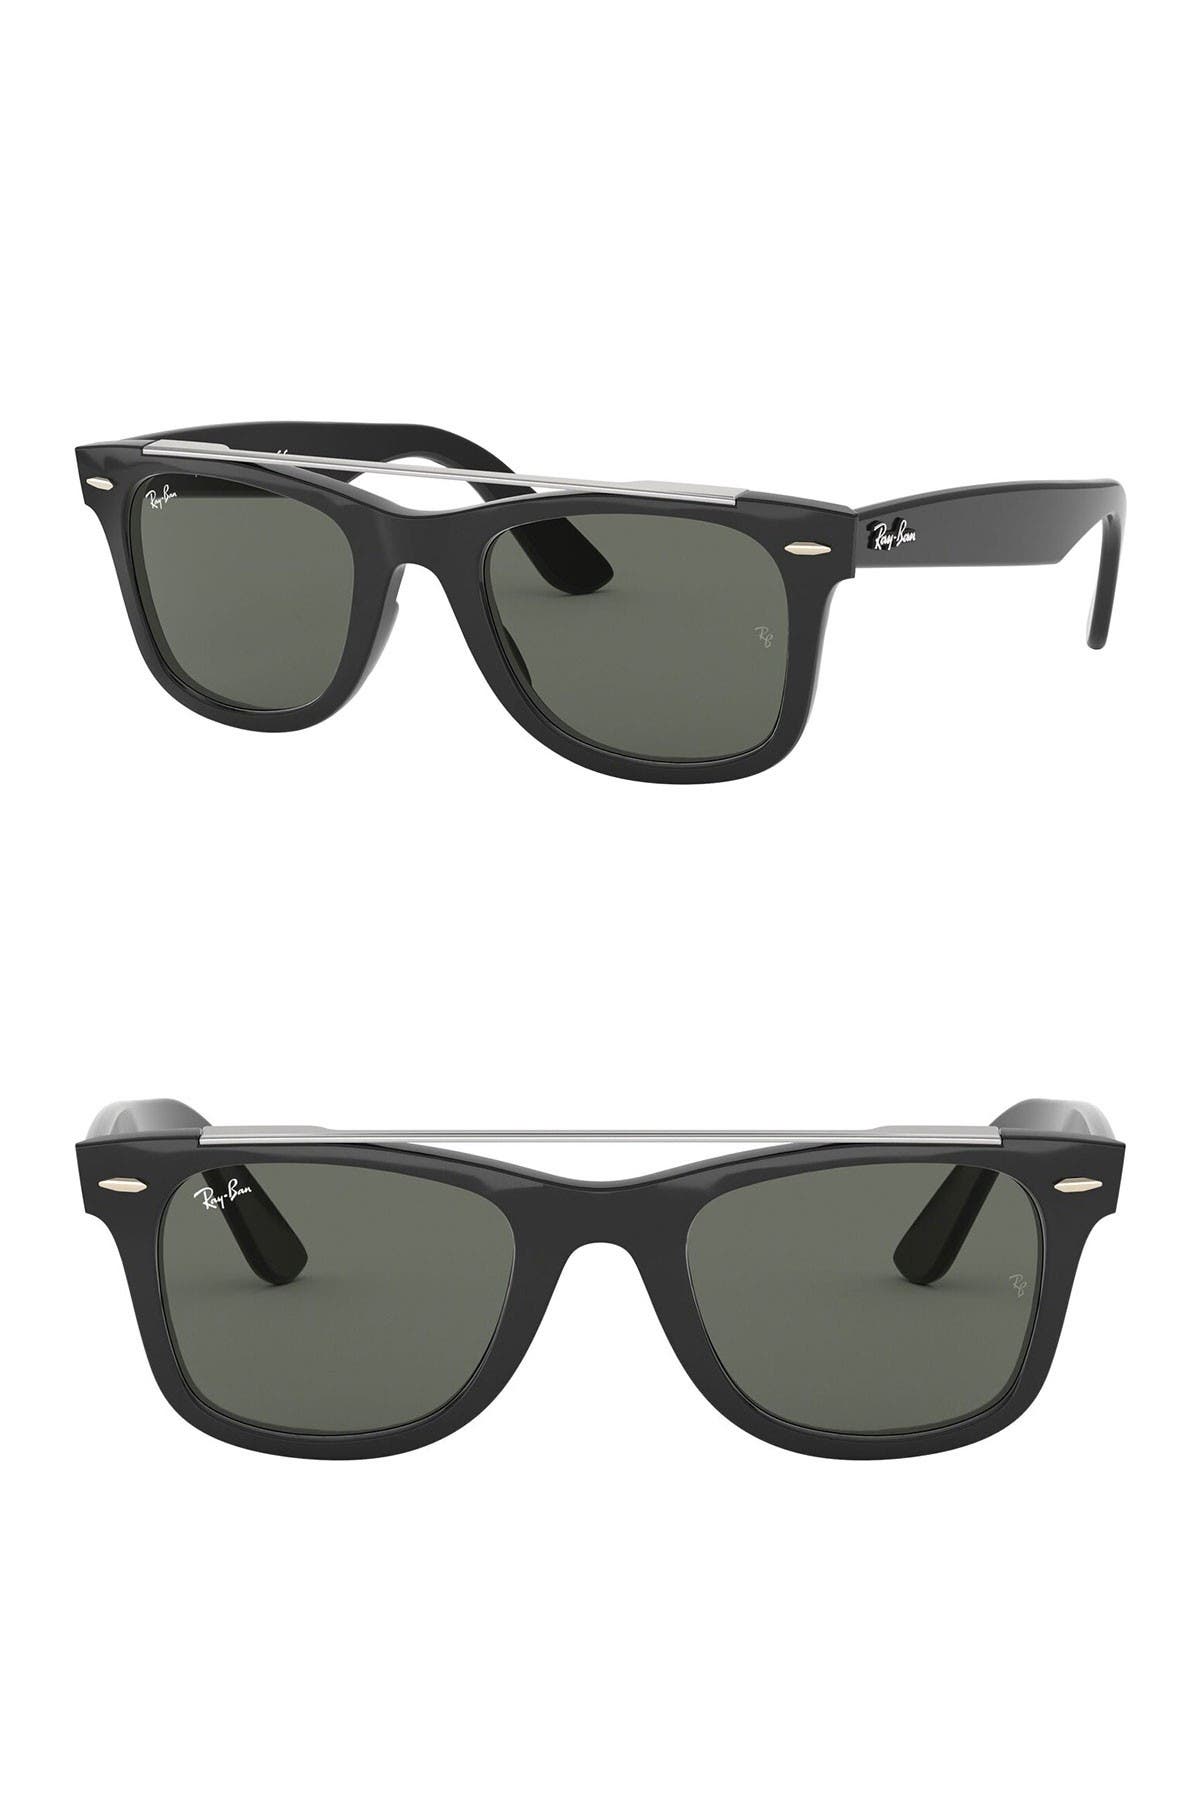 Ray Ban 52mm Polarized Wayfarer Sunglasses Nordstrom Rack